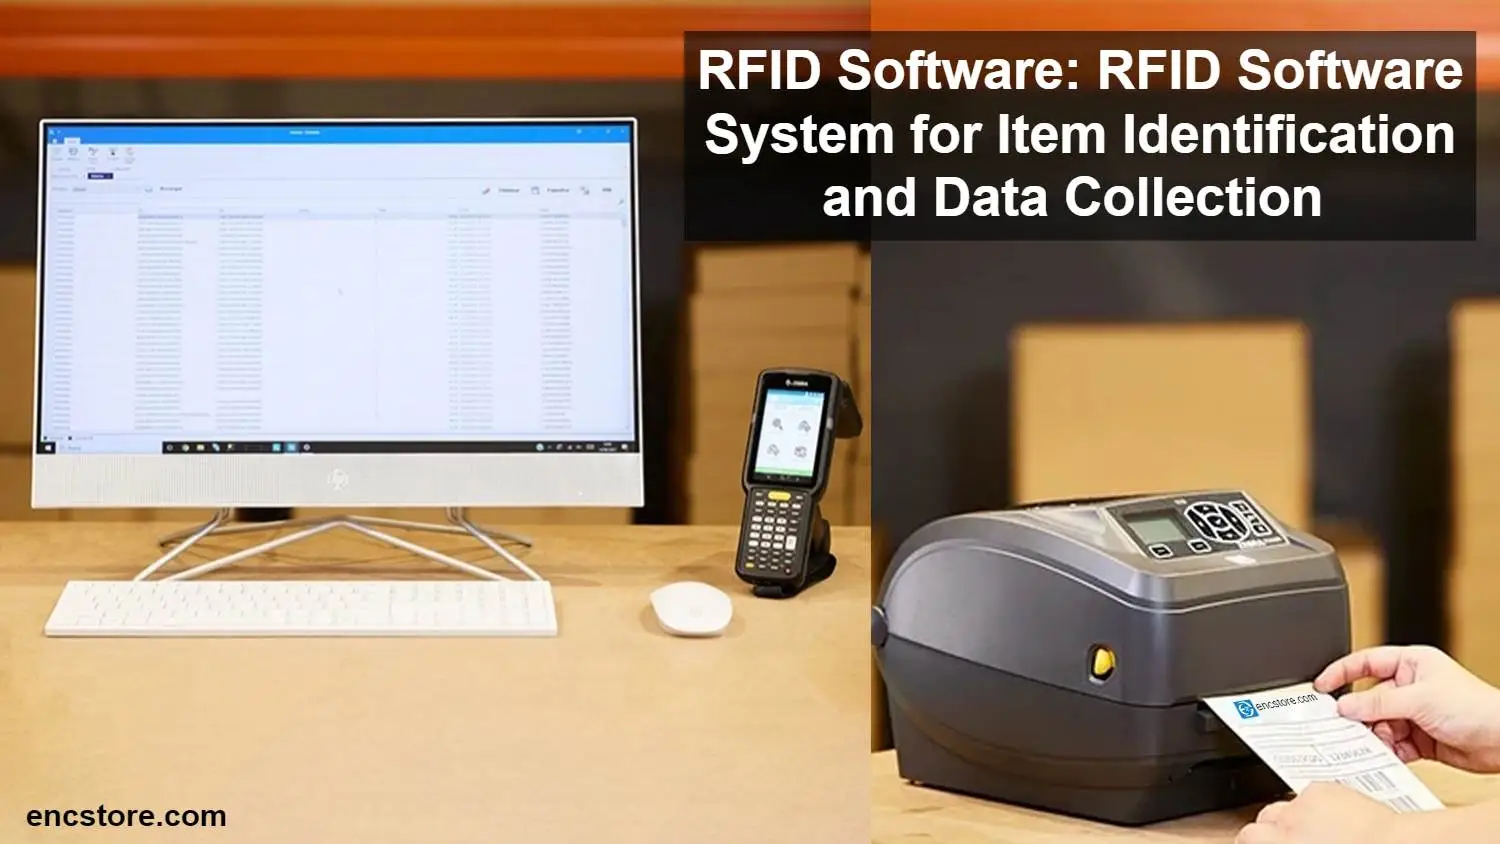 RFID Software